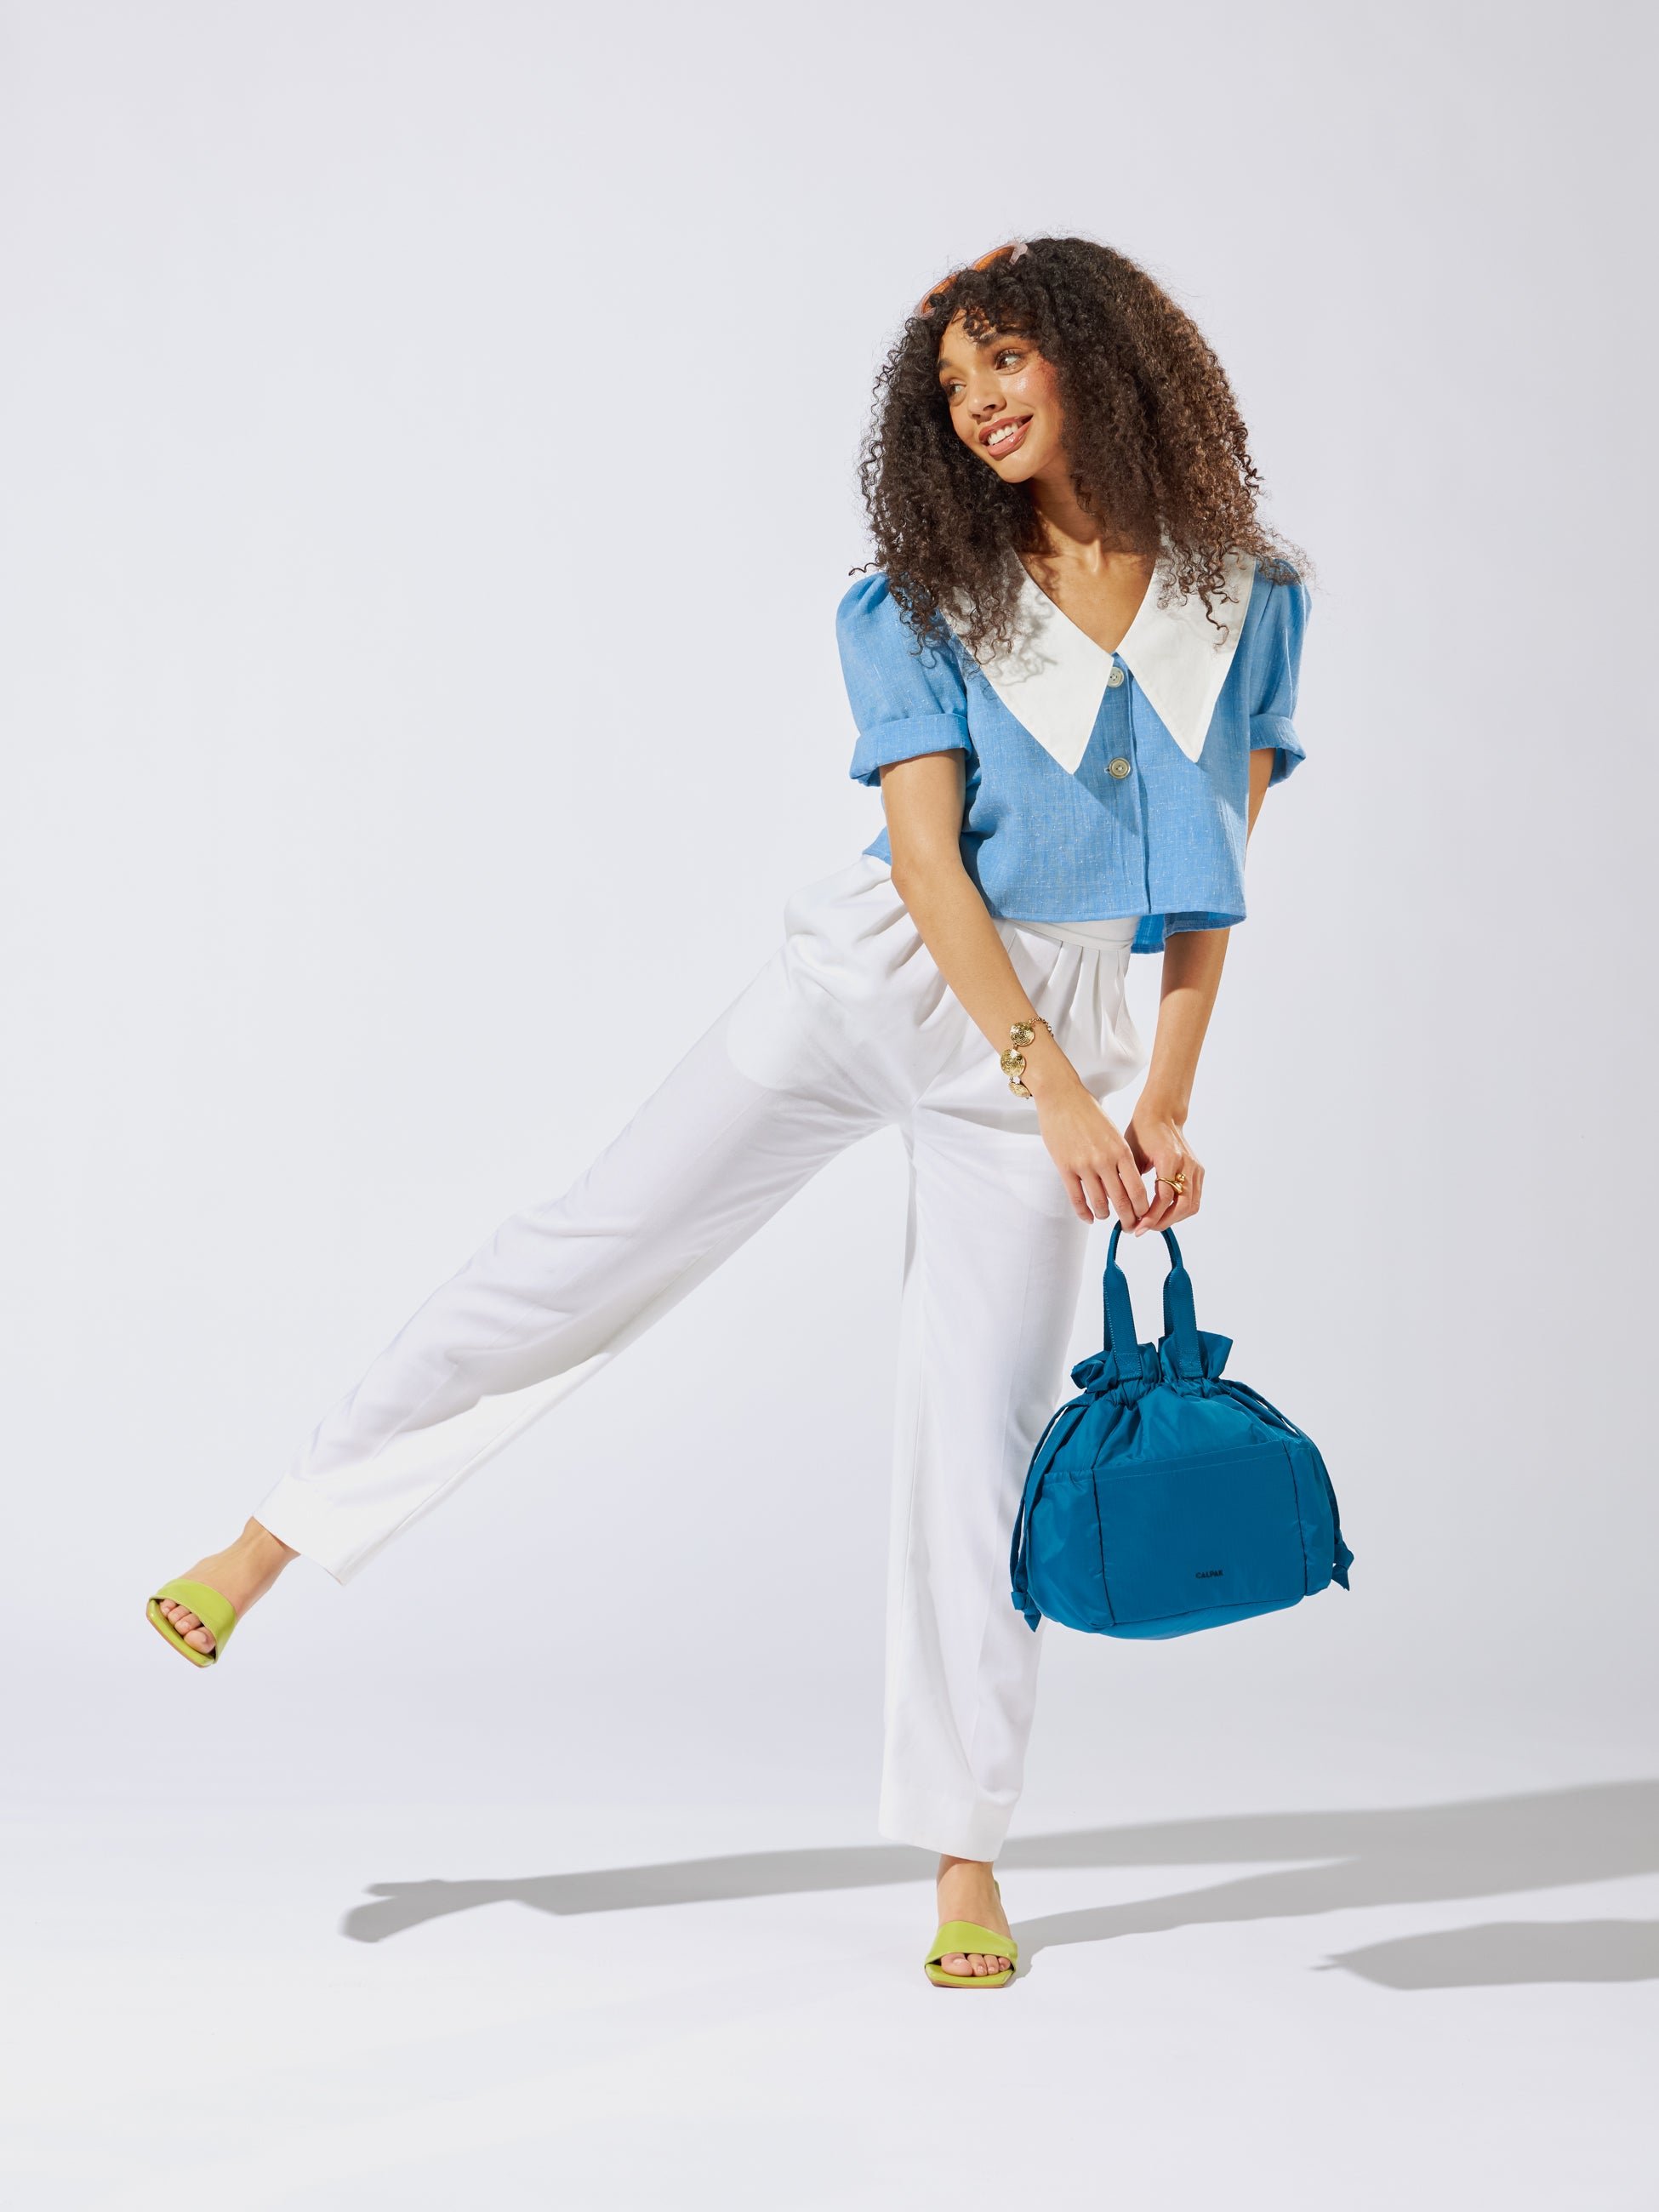 Model holding CALPAK Insulated Lunch Bag for women in lagoon blue